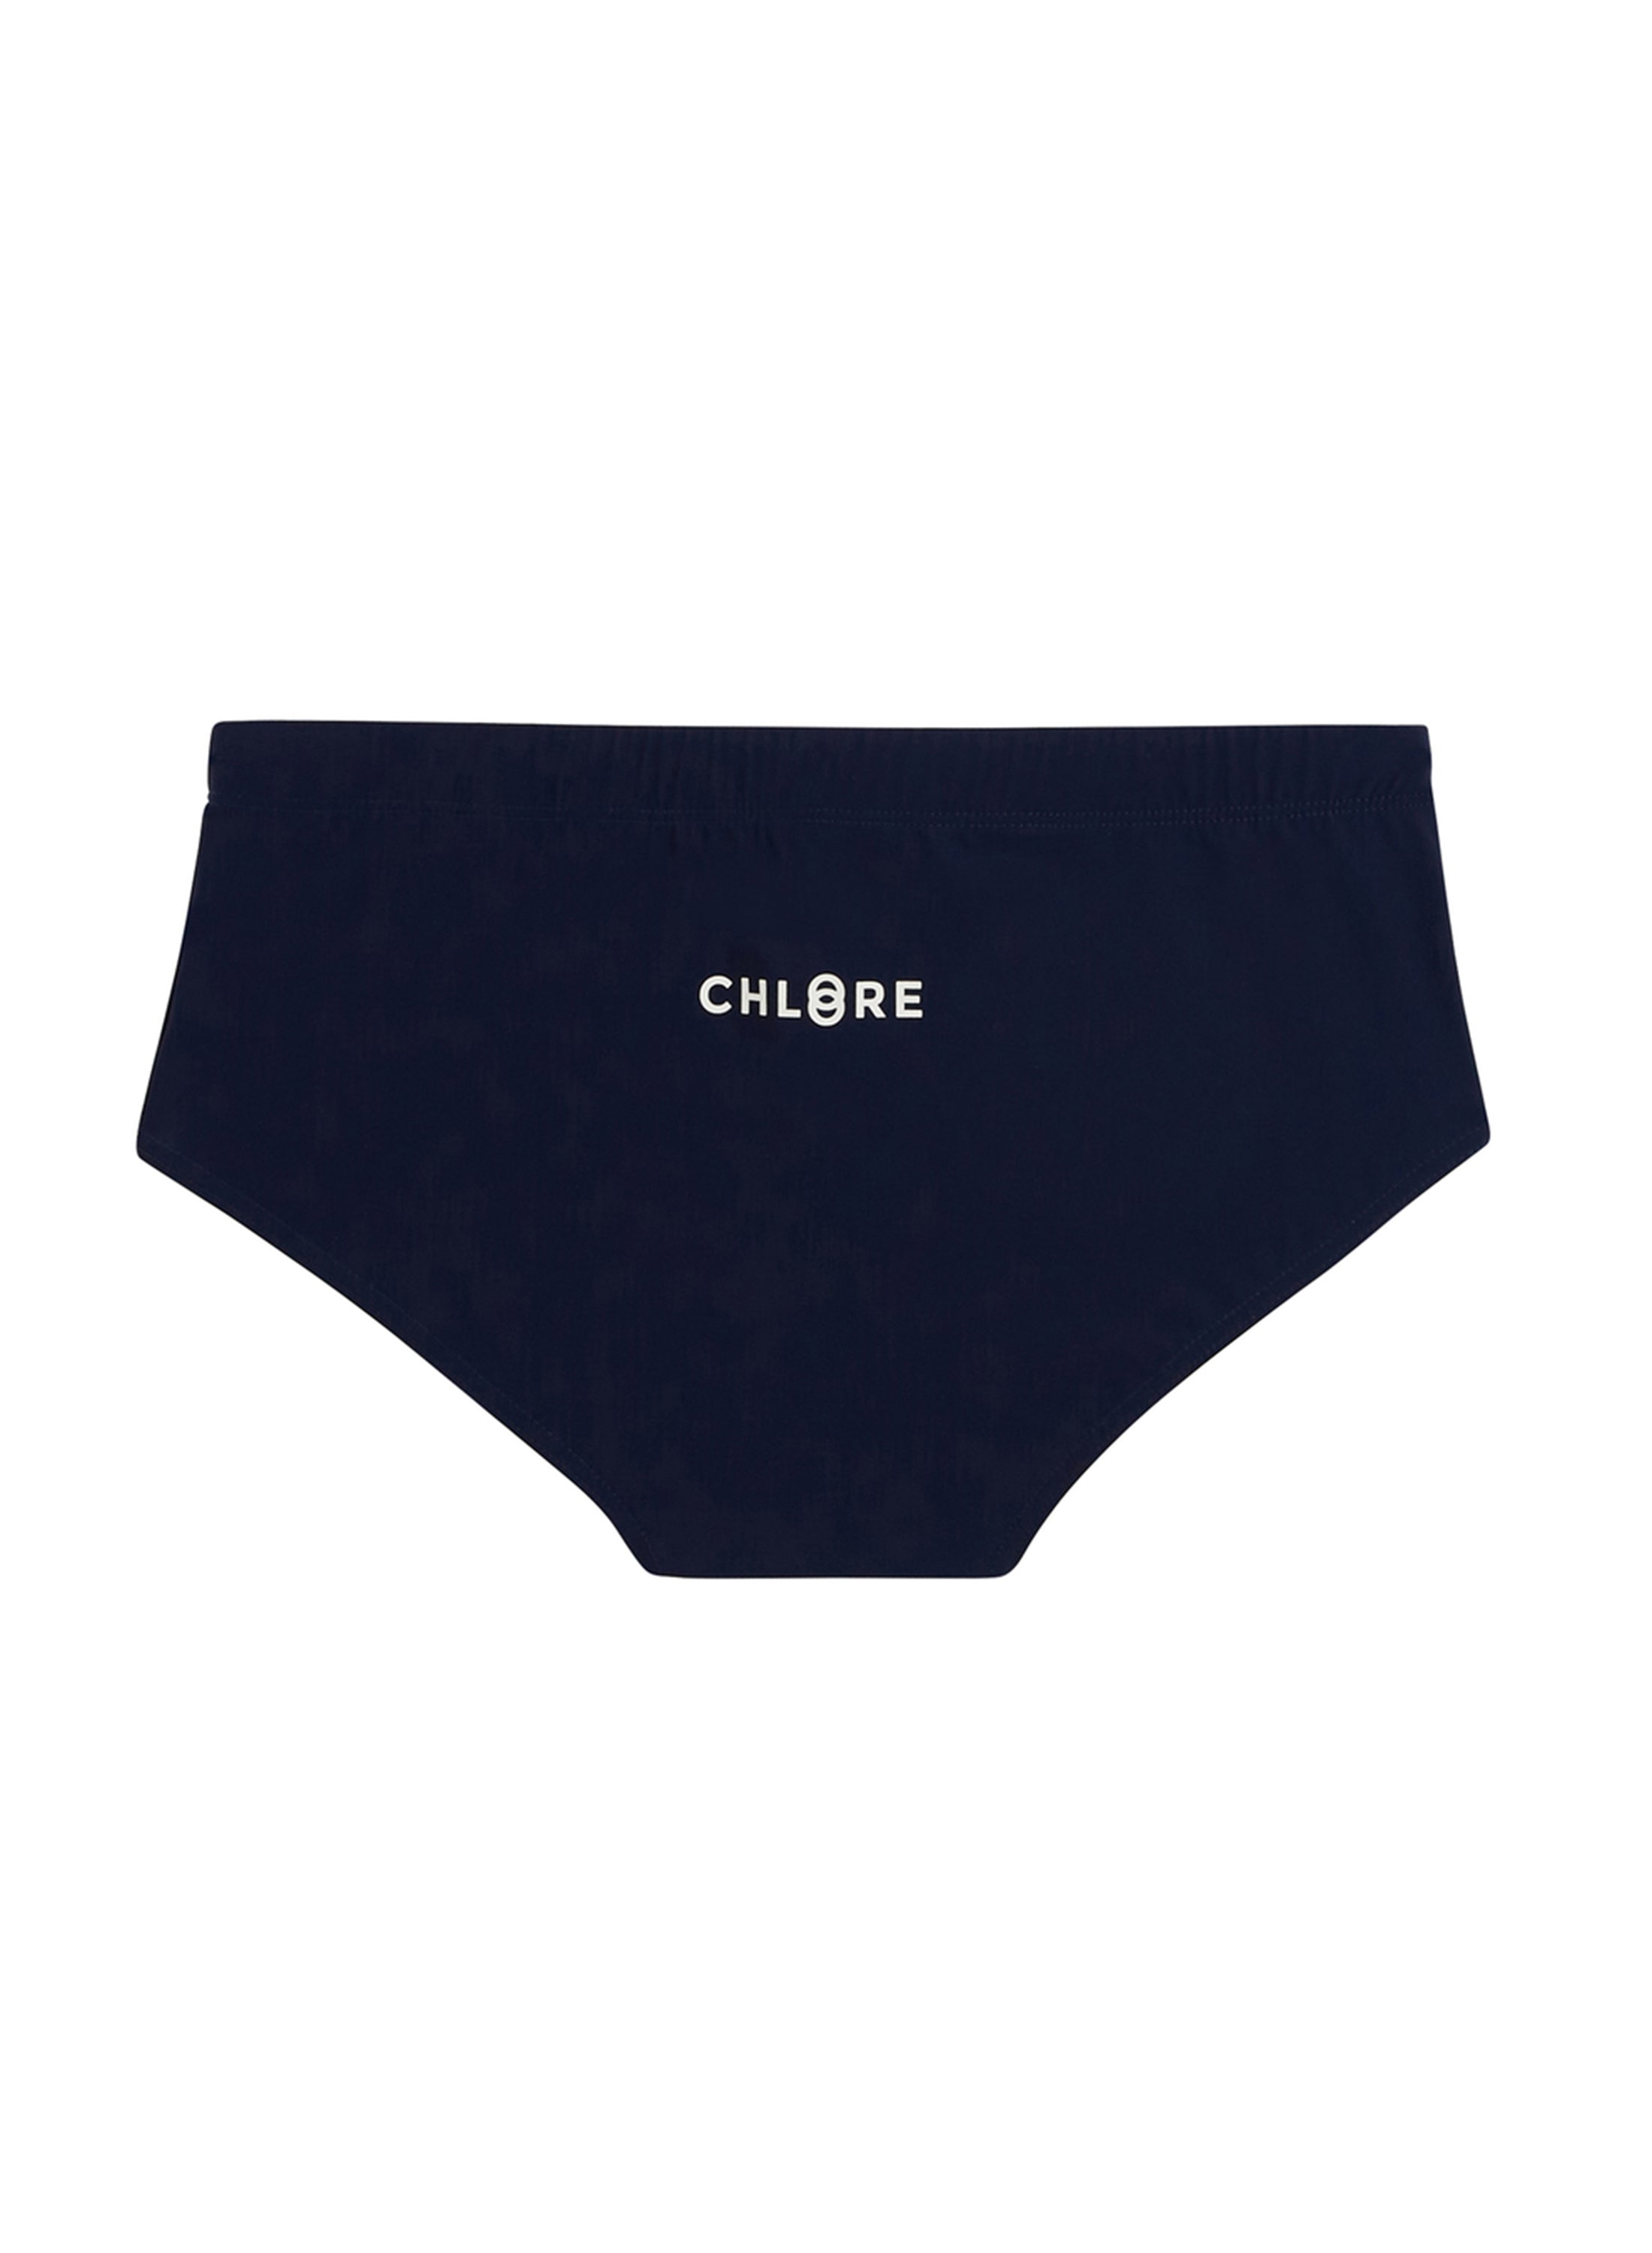 chlore-swimwear-maillot-de-bain-premium-maillot-homme-felipe-summer-navy